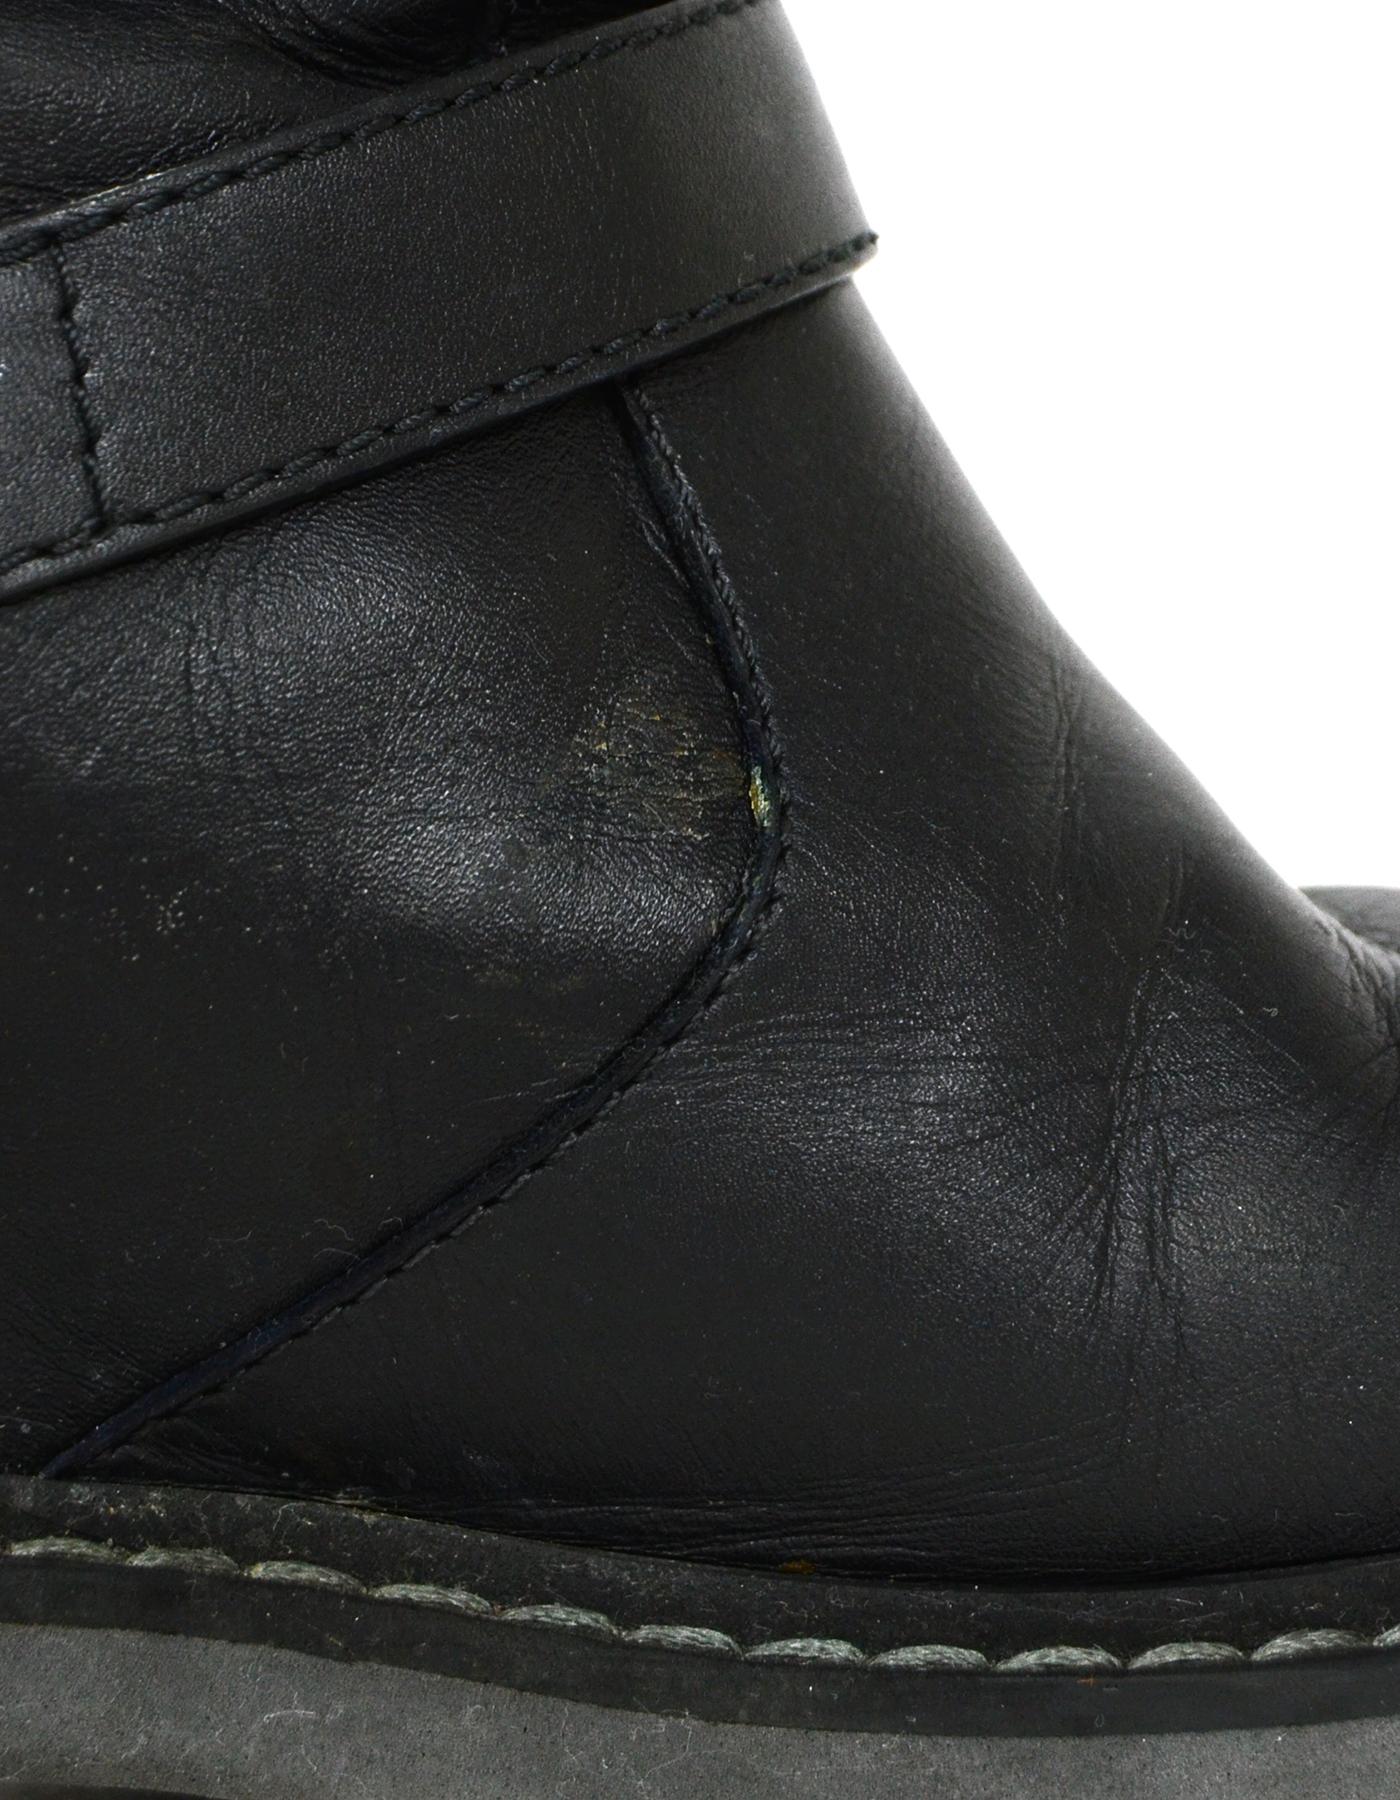 Fendi Black Leather Concealed Wedge Boot sz 38.5 2